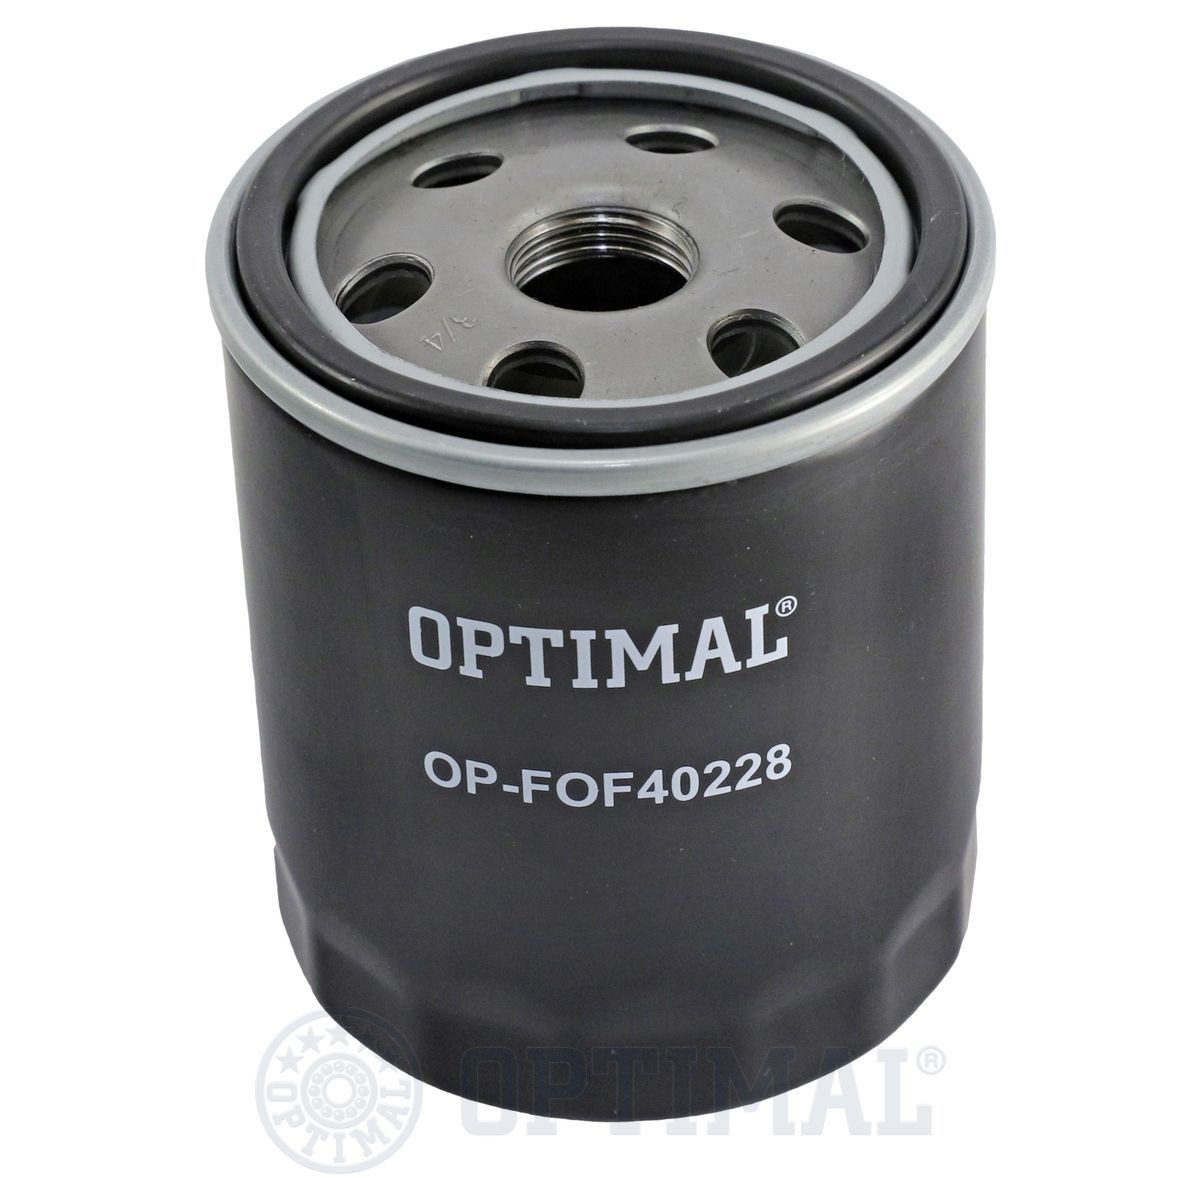 OPTIMAL OP-FOF40228 Oil filter S550-14-302 -9A